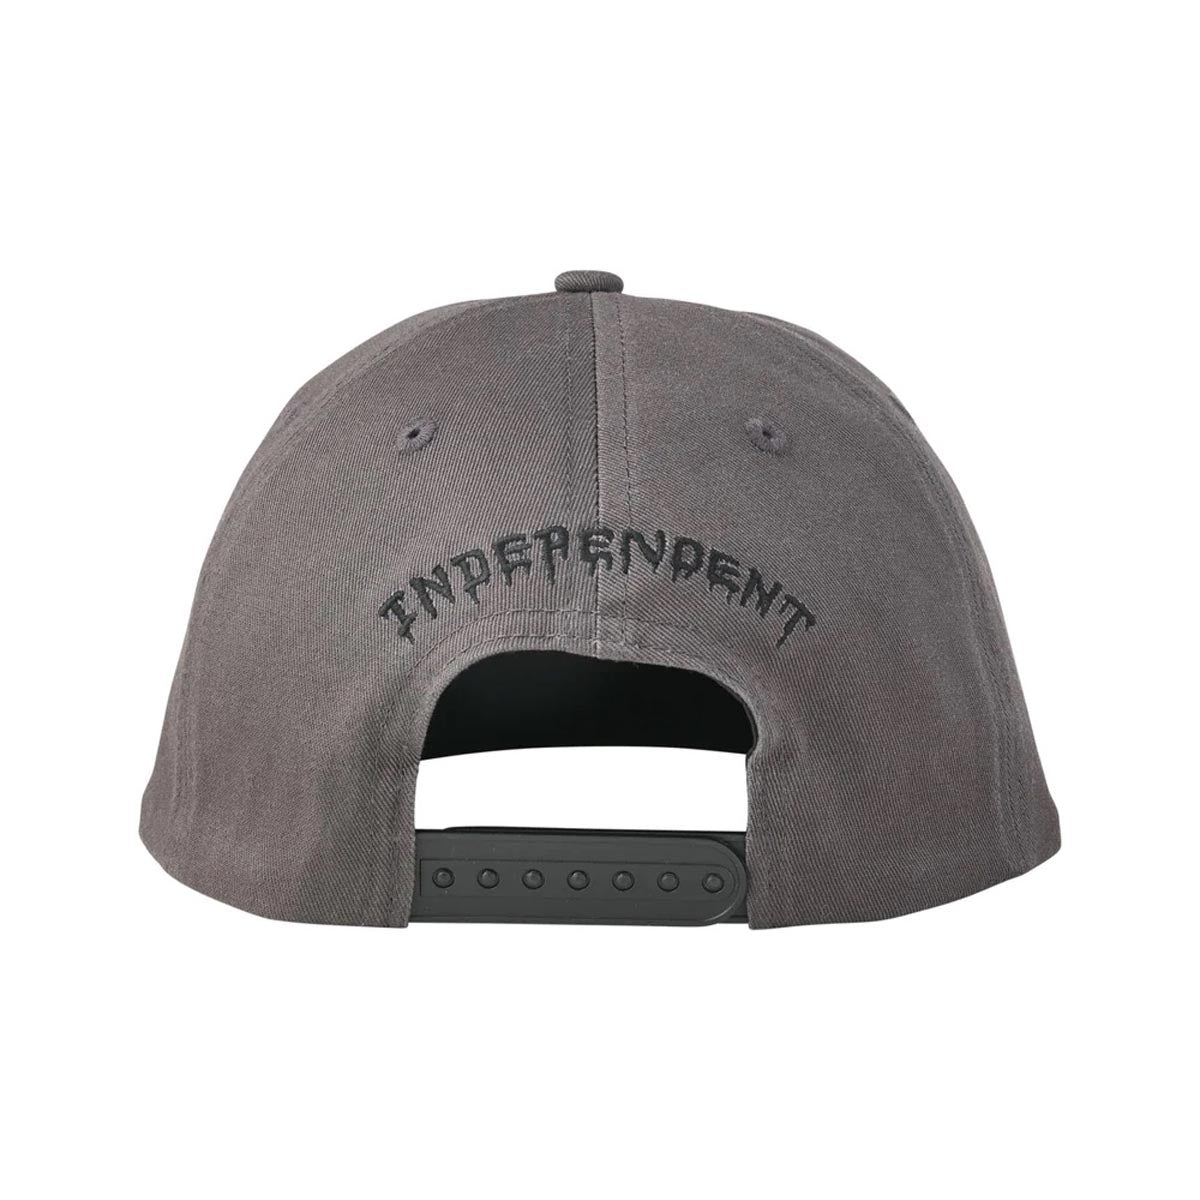 Independent Vandal Snapback Unstructured Hat - Charcoal image 2